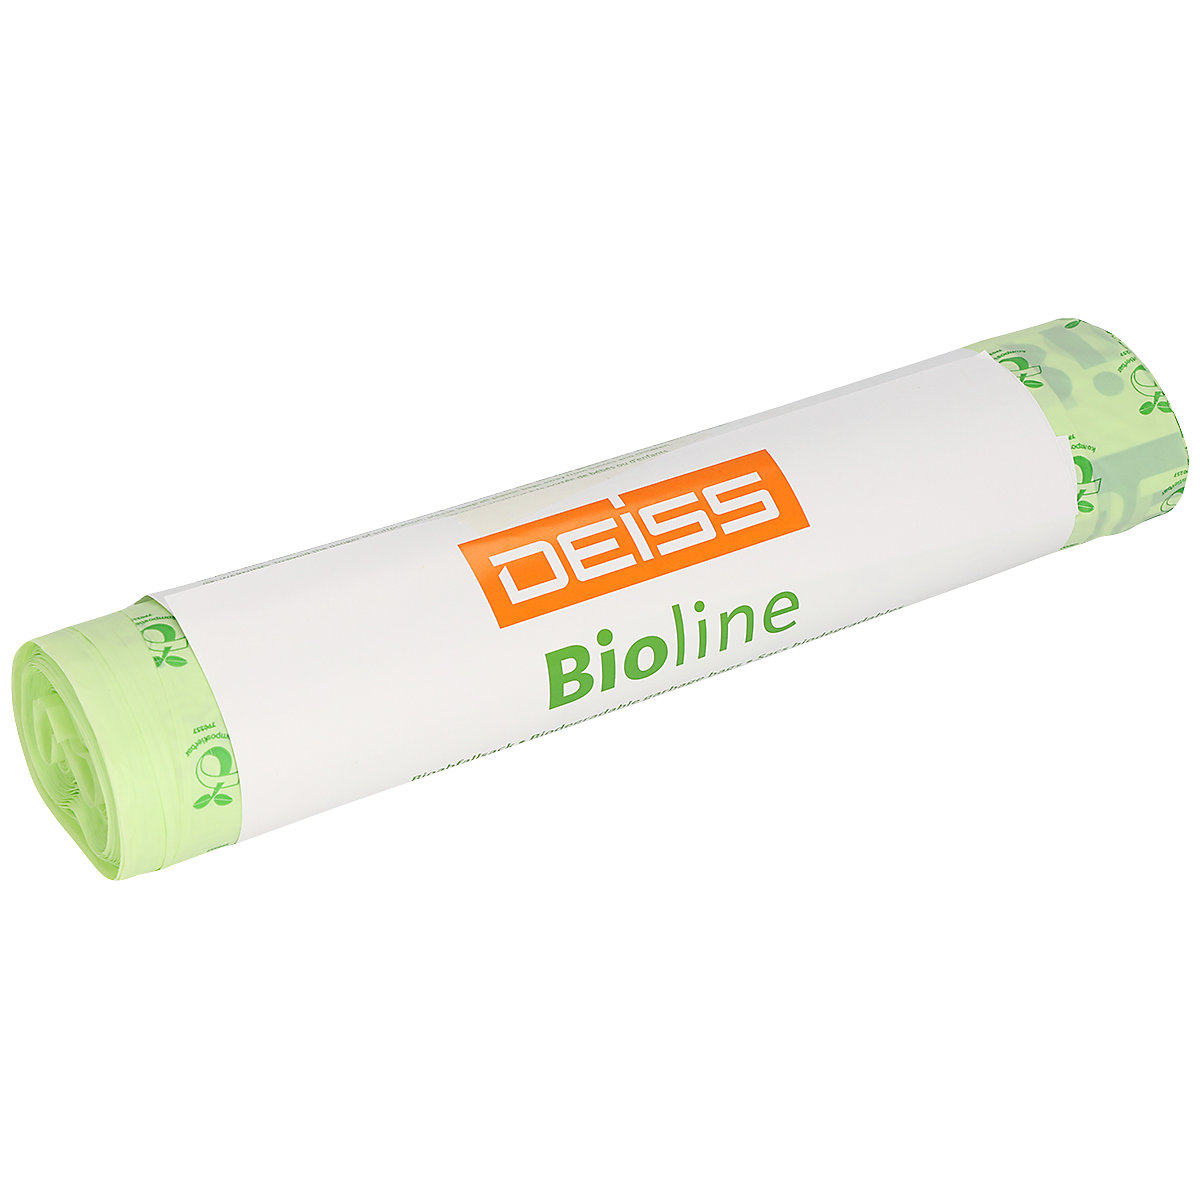 Deiss Bioline-Abfallsäcke ecovio®, Volumen 200 l, 20 Rollen à 5 Stk, VE 100 Stk